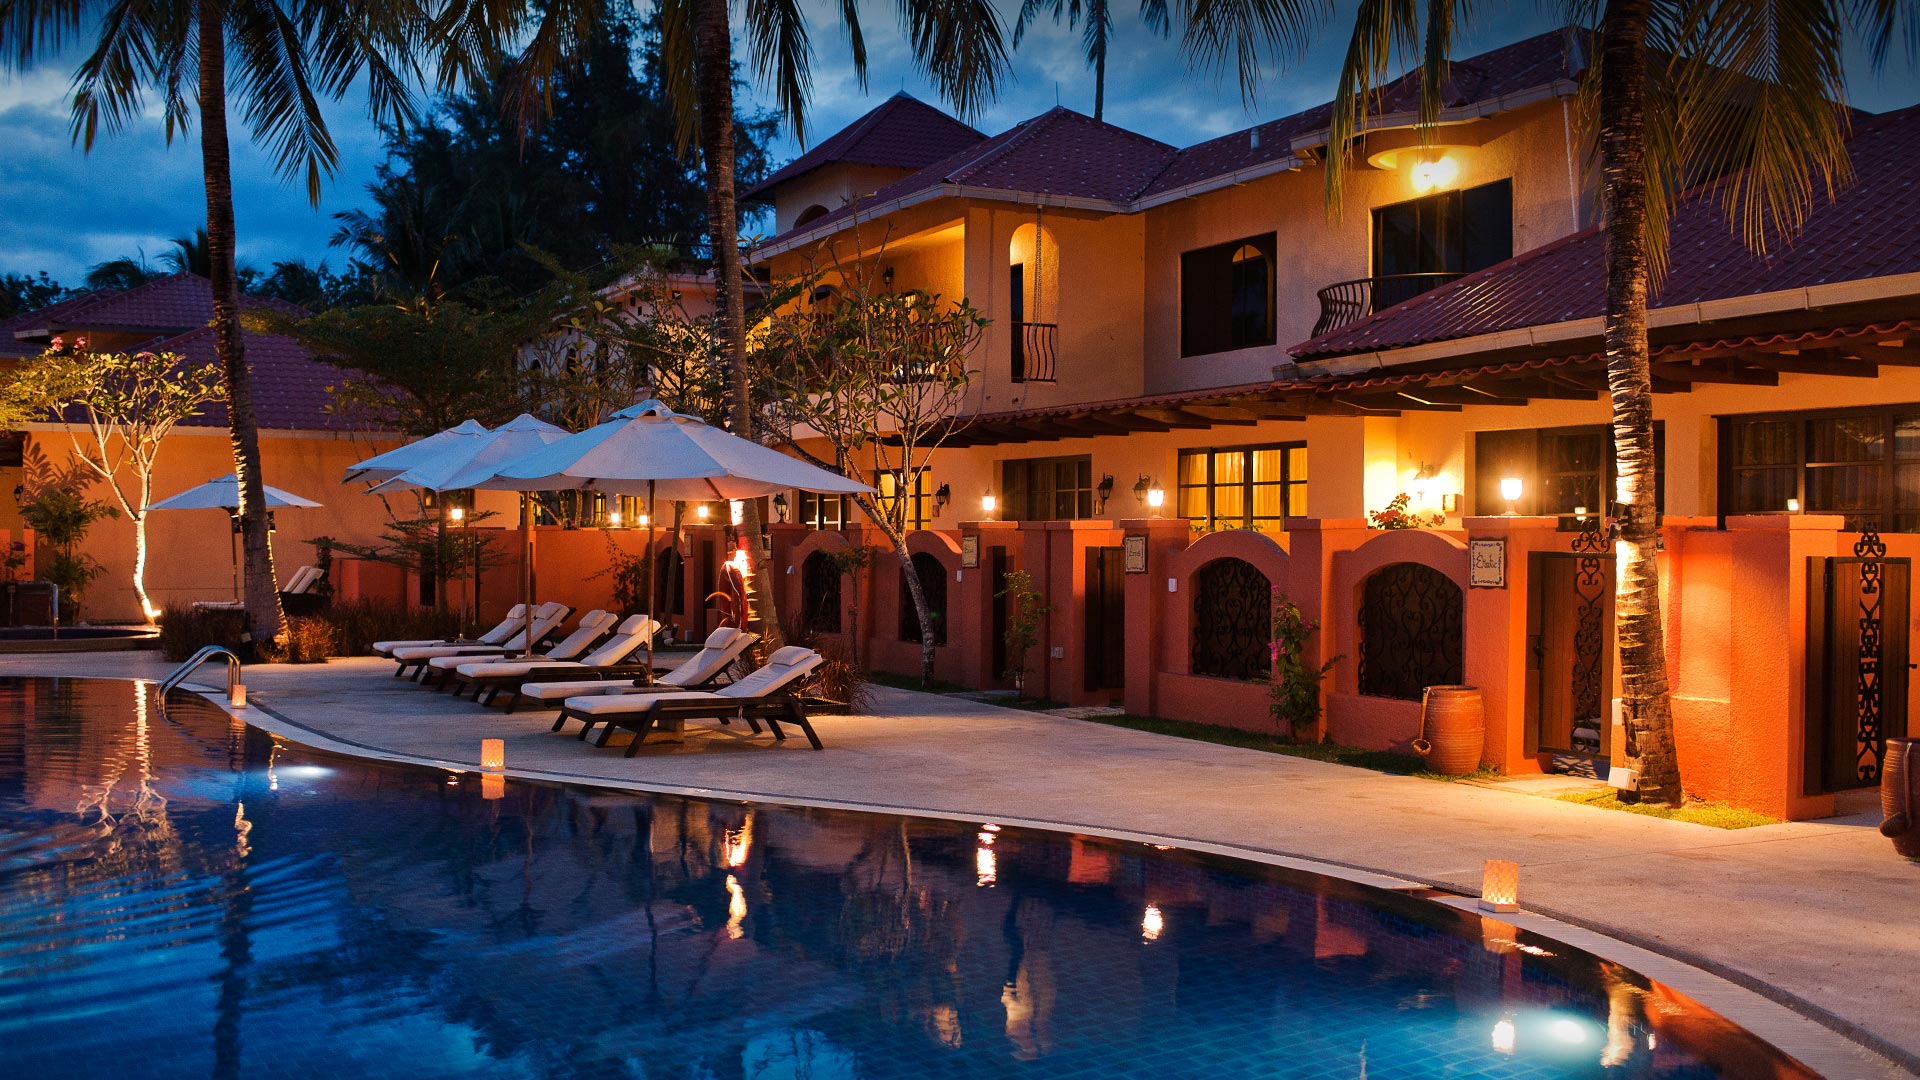 Malam romantik di Casa Del Mar, Langkawi. Foto - google.com